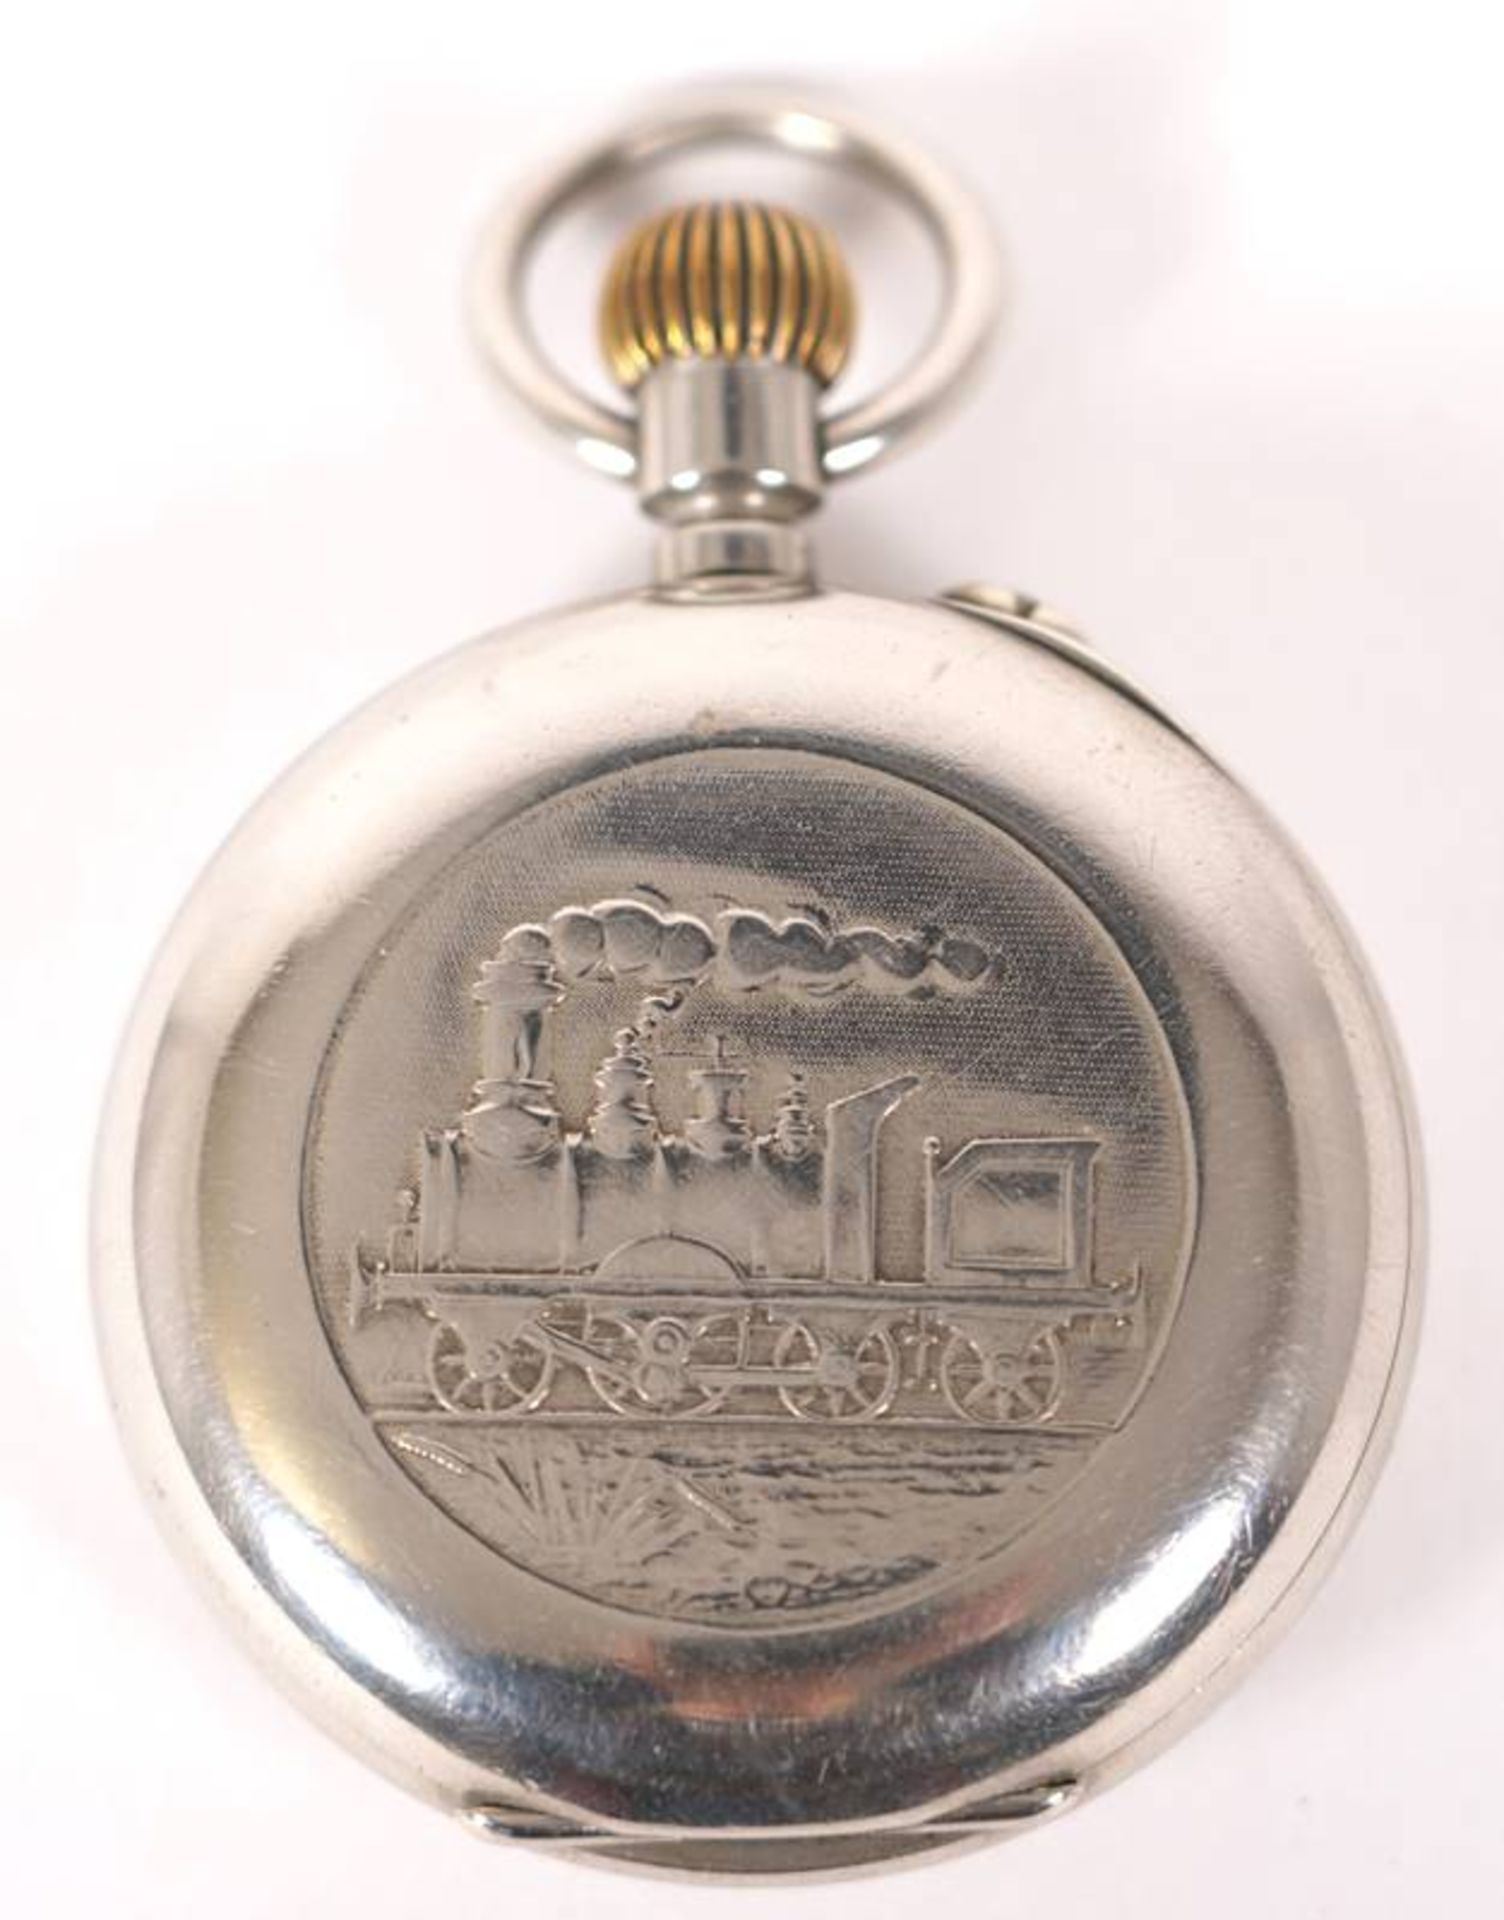 Railwayman's pocket watch - Image 4 of 4